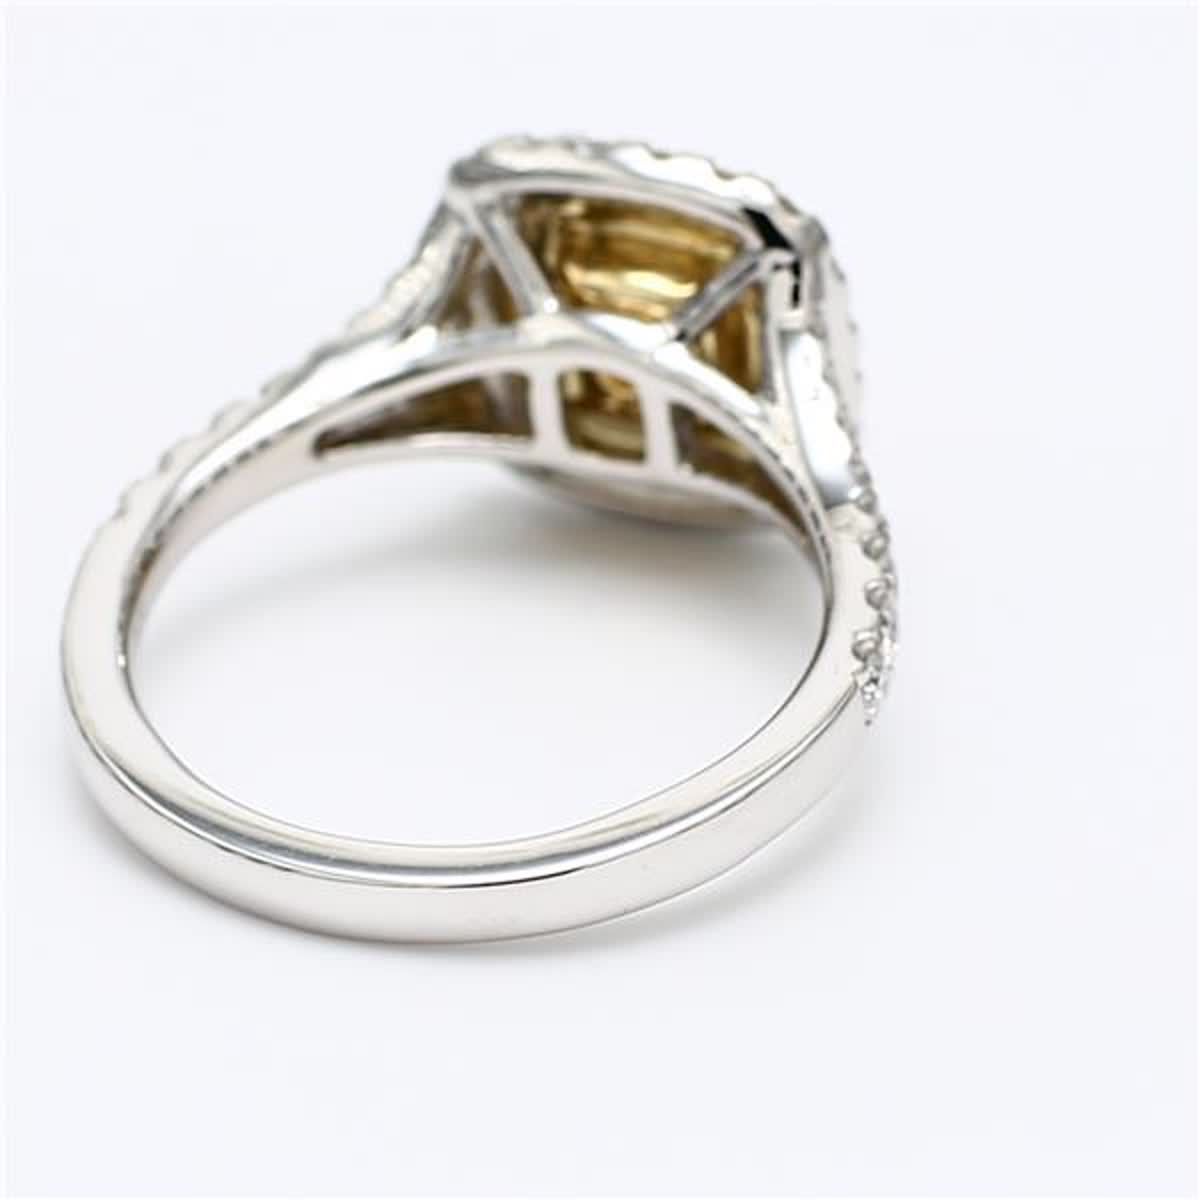 GIA Certified Natural Yellow Cushion and White Diamond 1.51 Carat TW Plat Ring